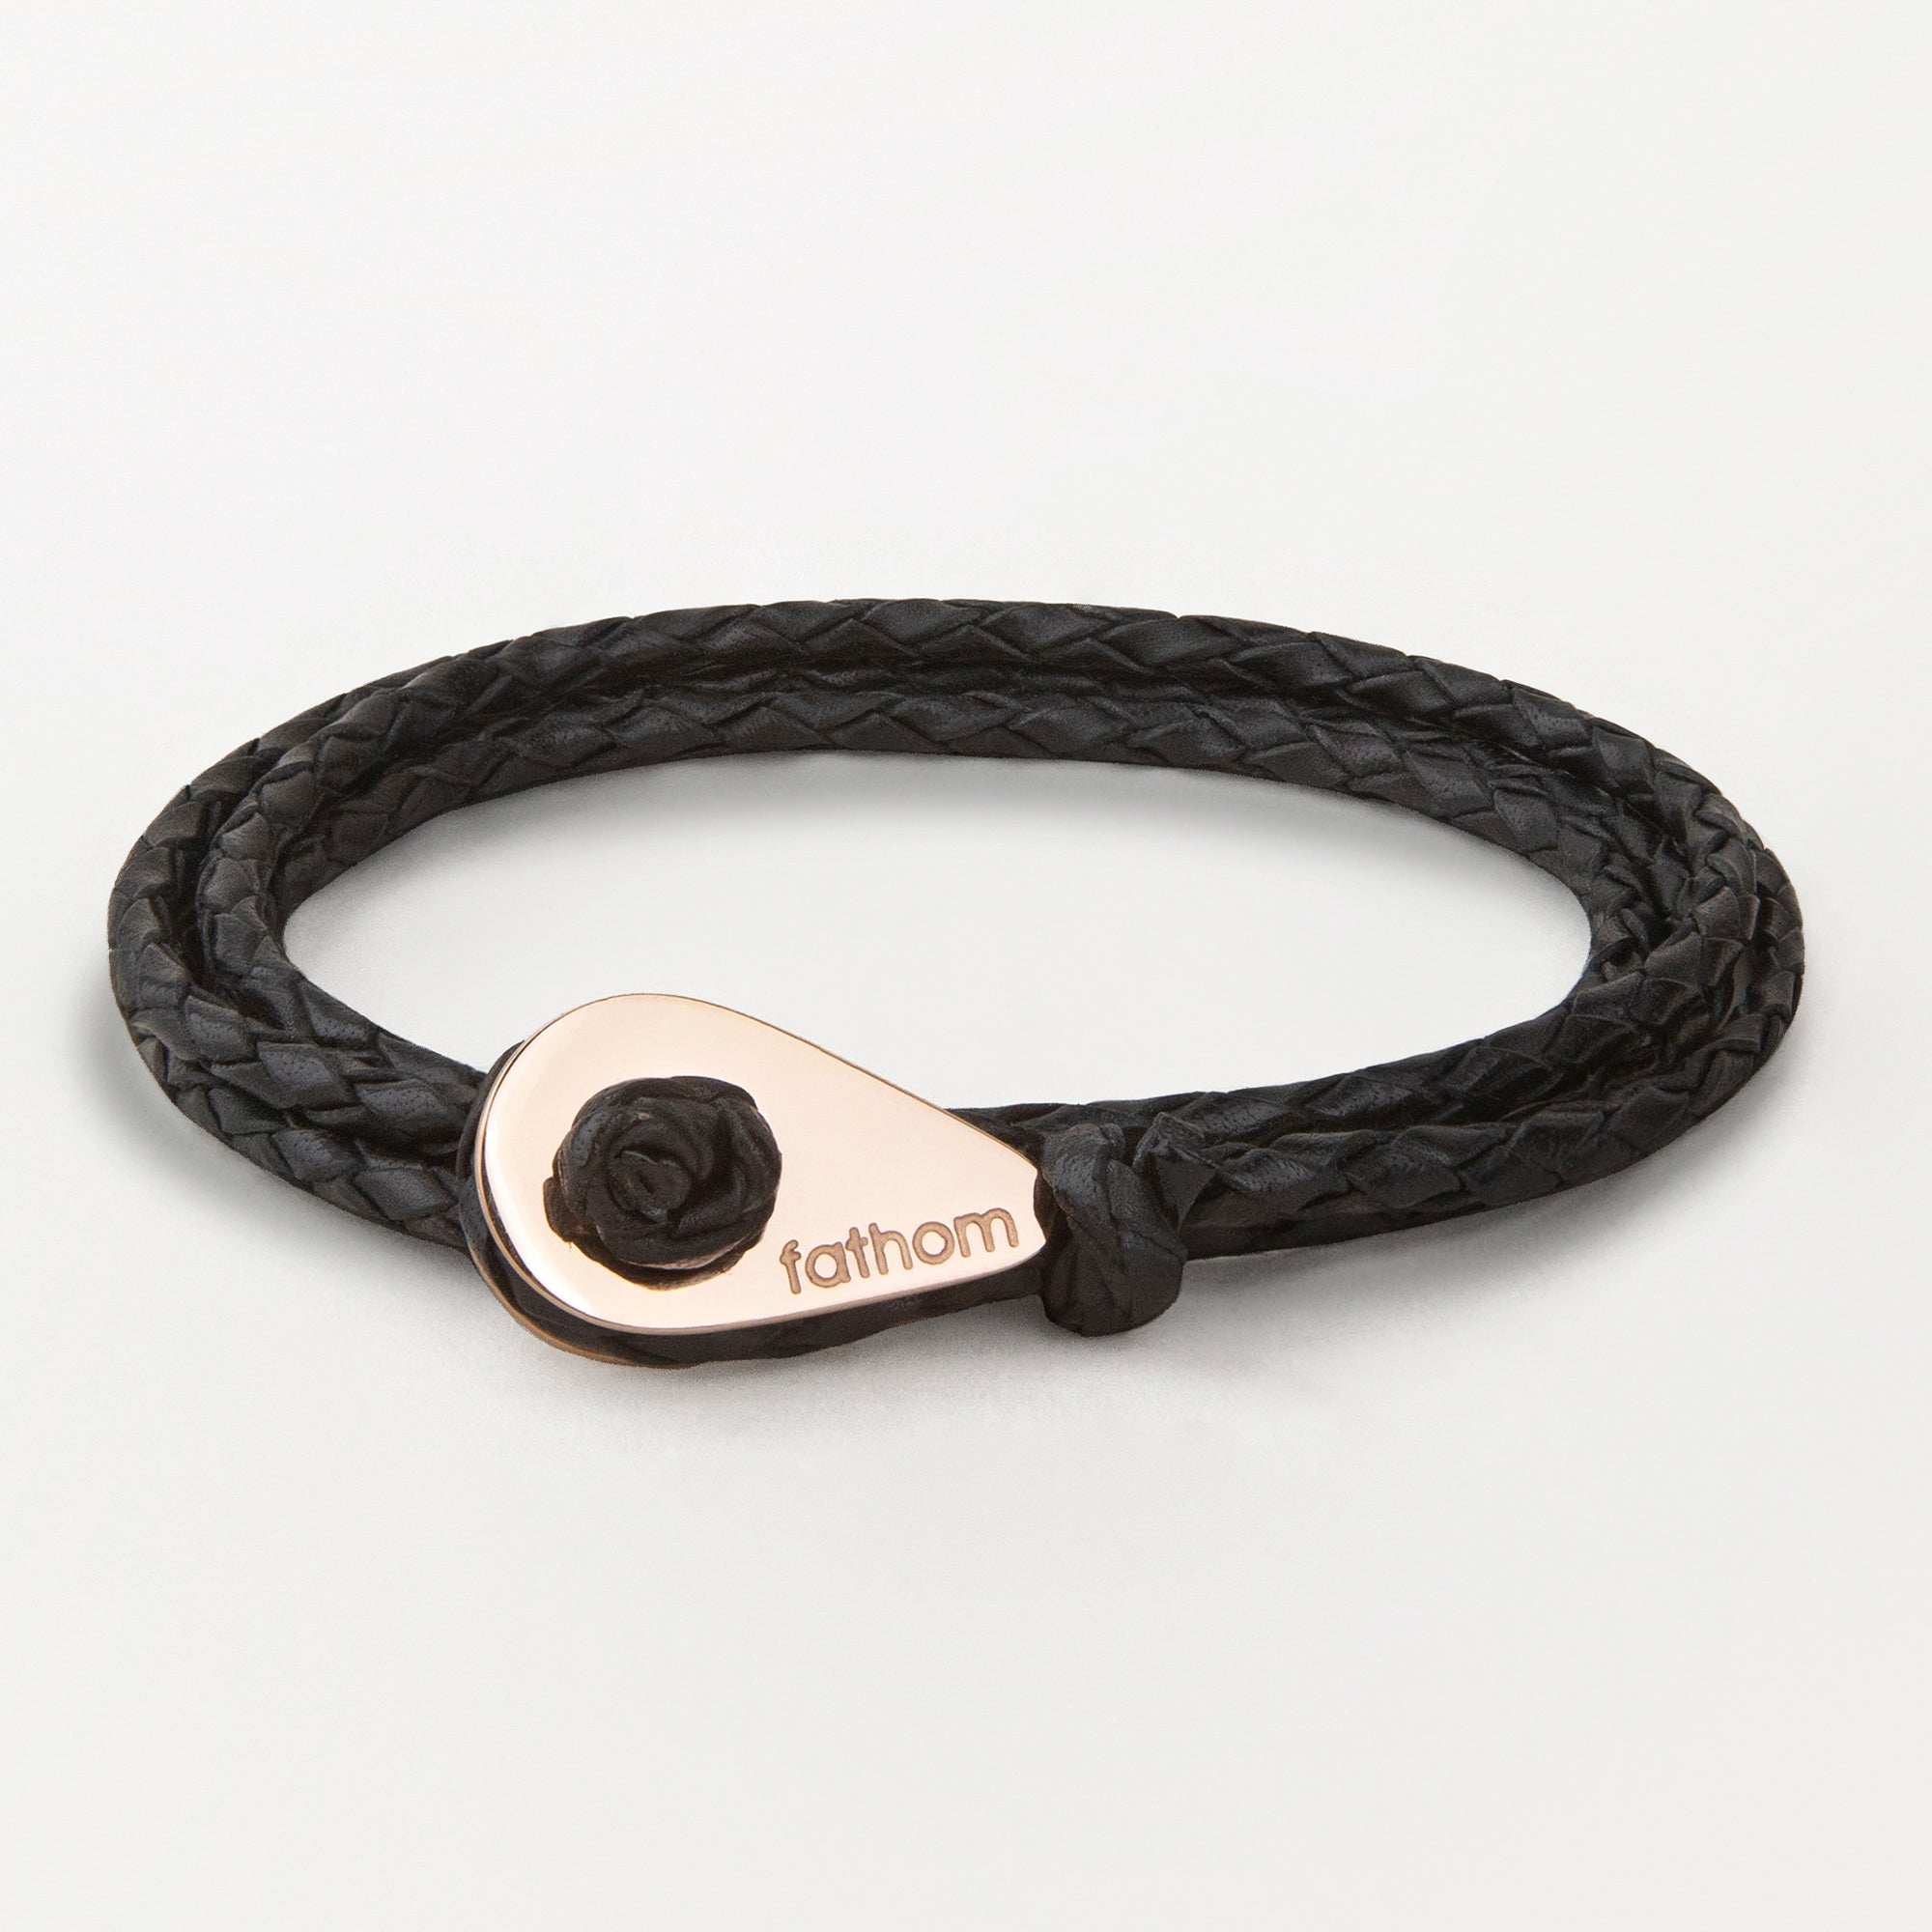 SAN CARLOS Braided Wrap Bracelets Bracelets Wristbands Thimble – Charm Fathom for Leather